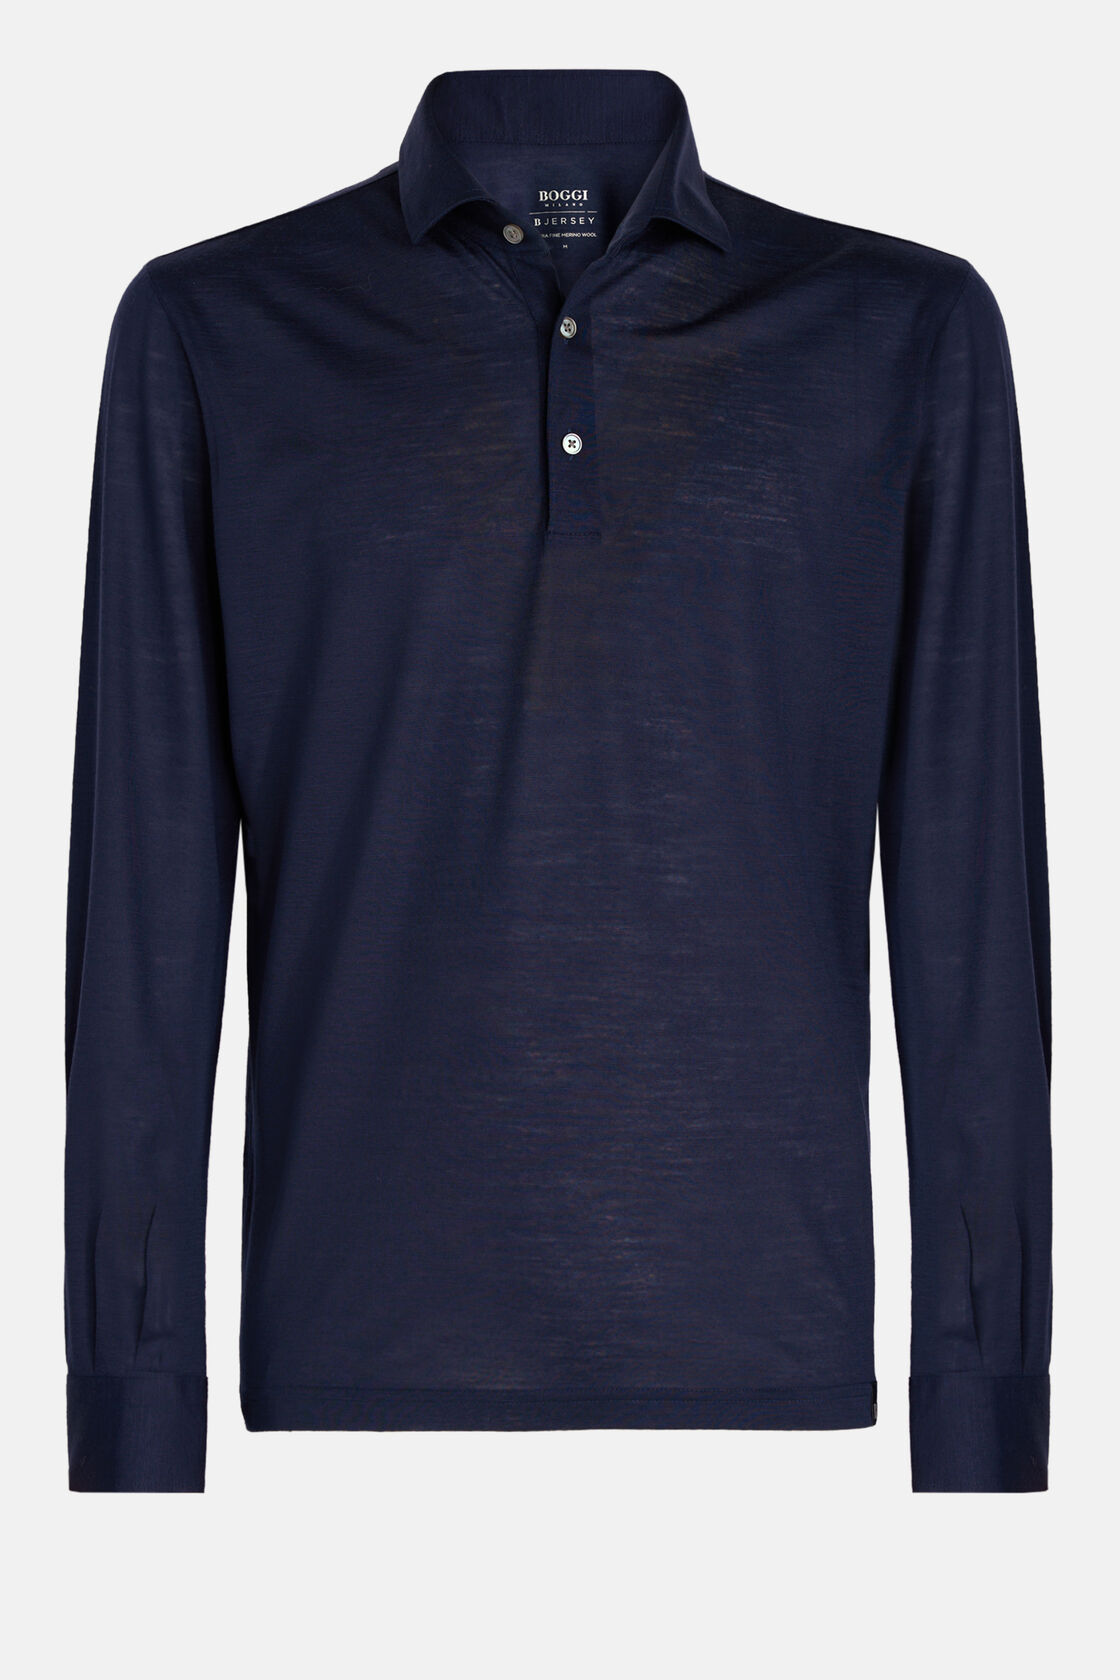 Regular Fit Merino Jersey Long-Sleeved Polo Shirt, Navy blue, hi-res